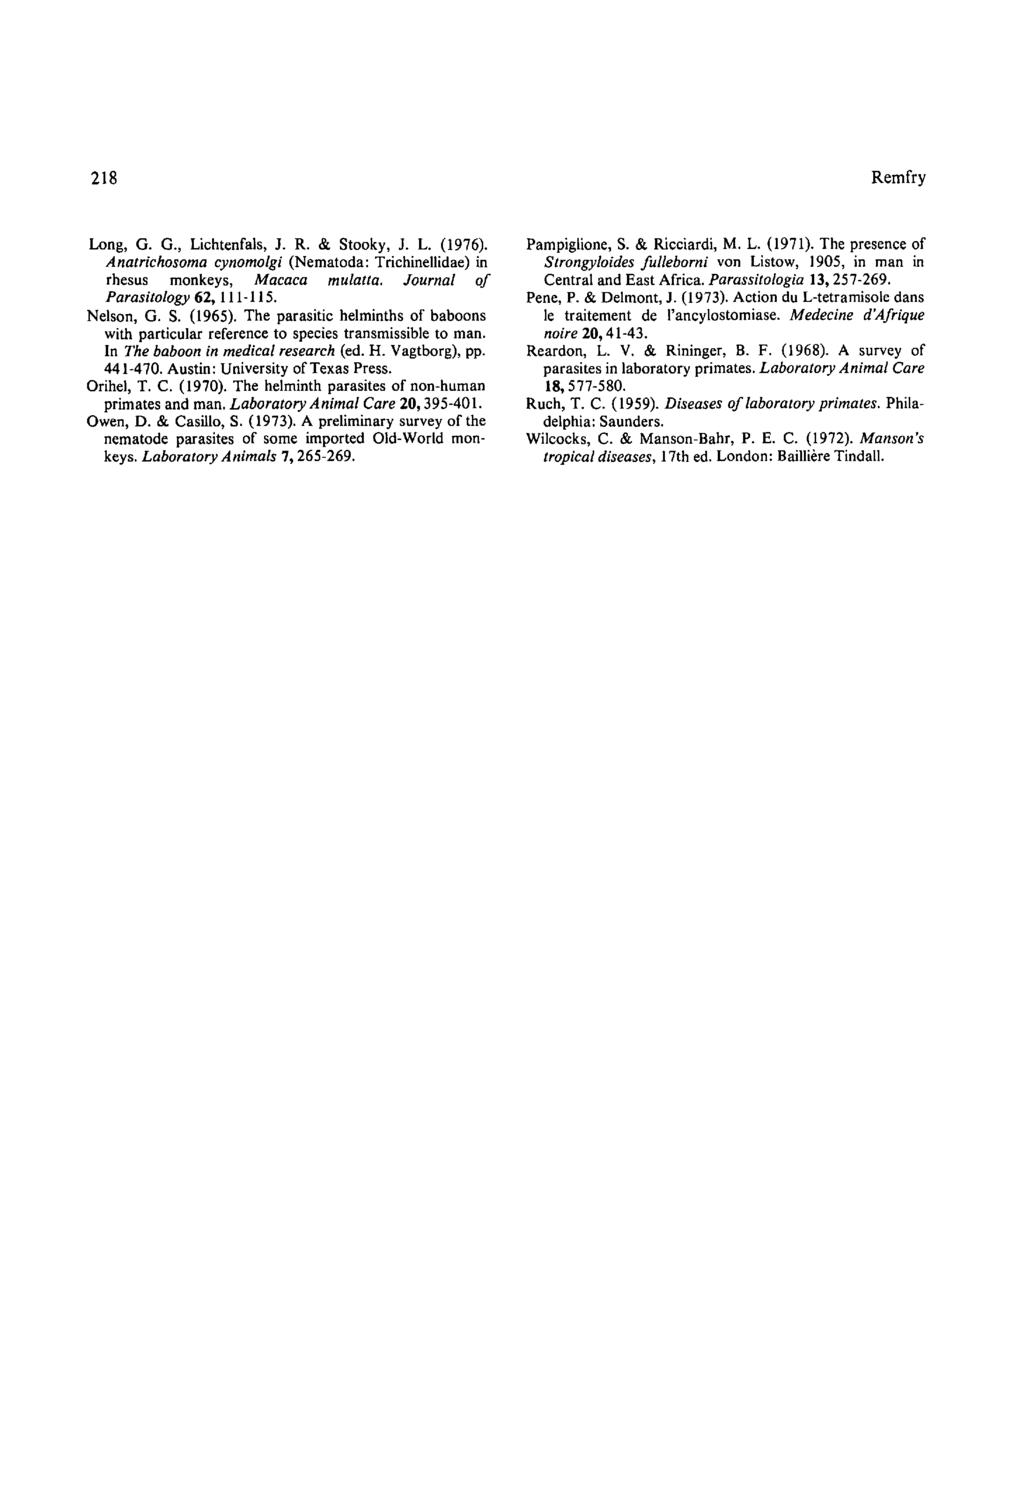 218 Remfry Long, G. G., Lichtenfals, J. R. & Stooky, J. L. (1976). Anatrichosoma cynomolgi (Nematoda: Trichinellidae) in rhesus monkeys, Macaca mulatla. Journal oj Parasitology 62, 111-115. Nelson, G.